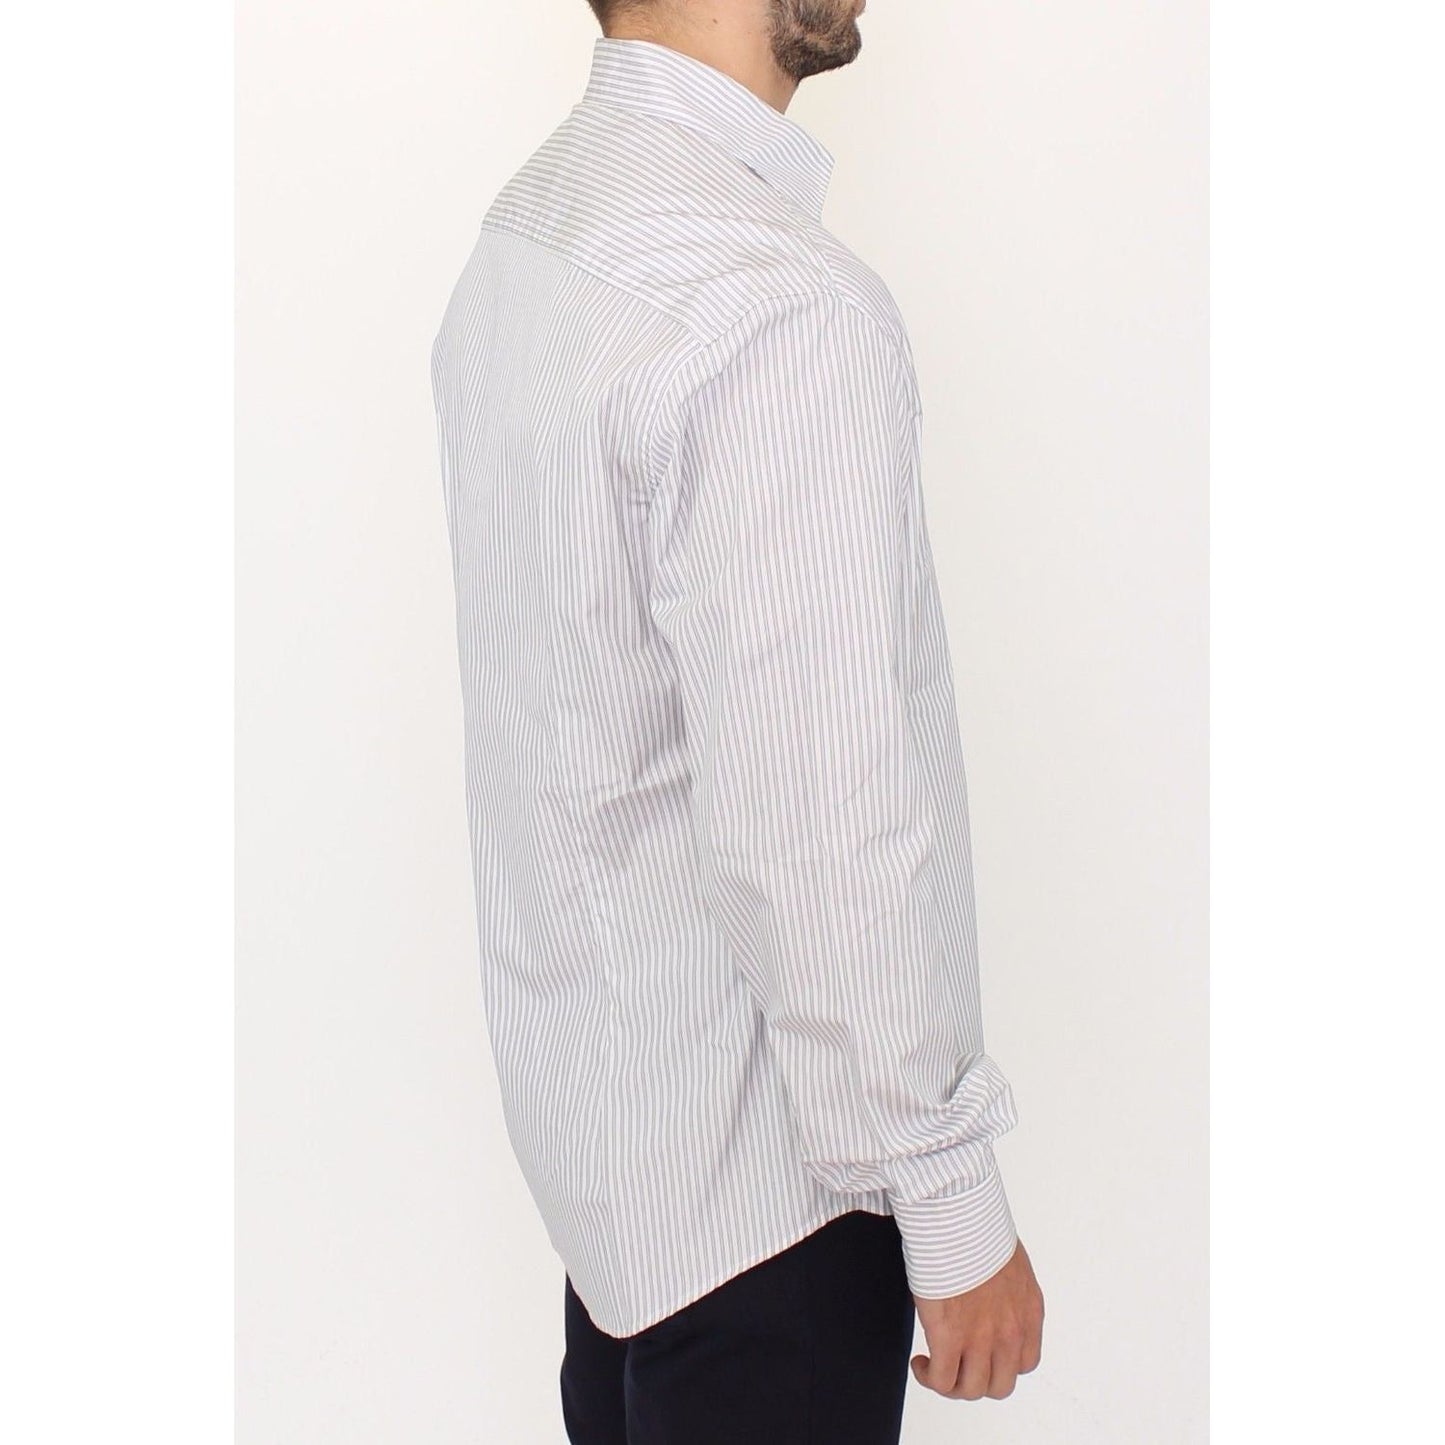 Ermanno Scervino Elegant White and Gray Striped Cotton Shirt white-gray-striped-regular-fit-casual-shirt